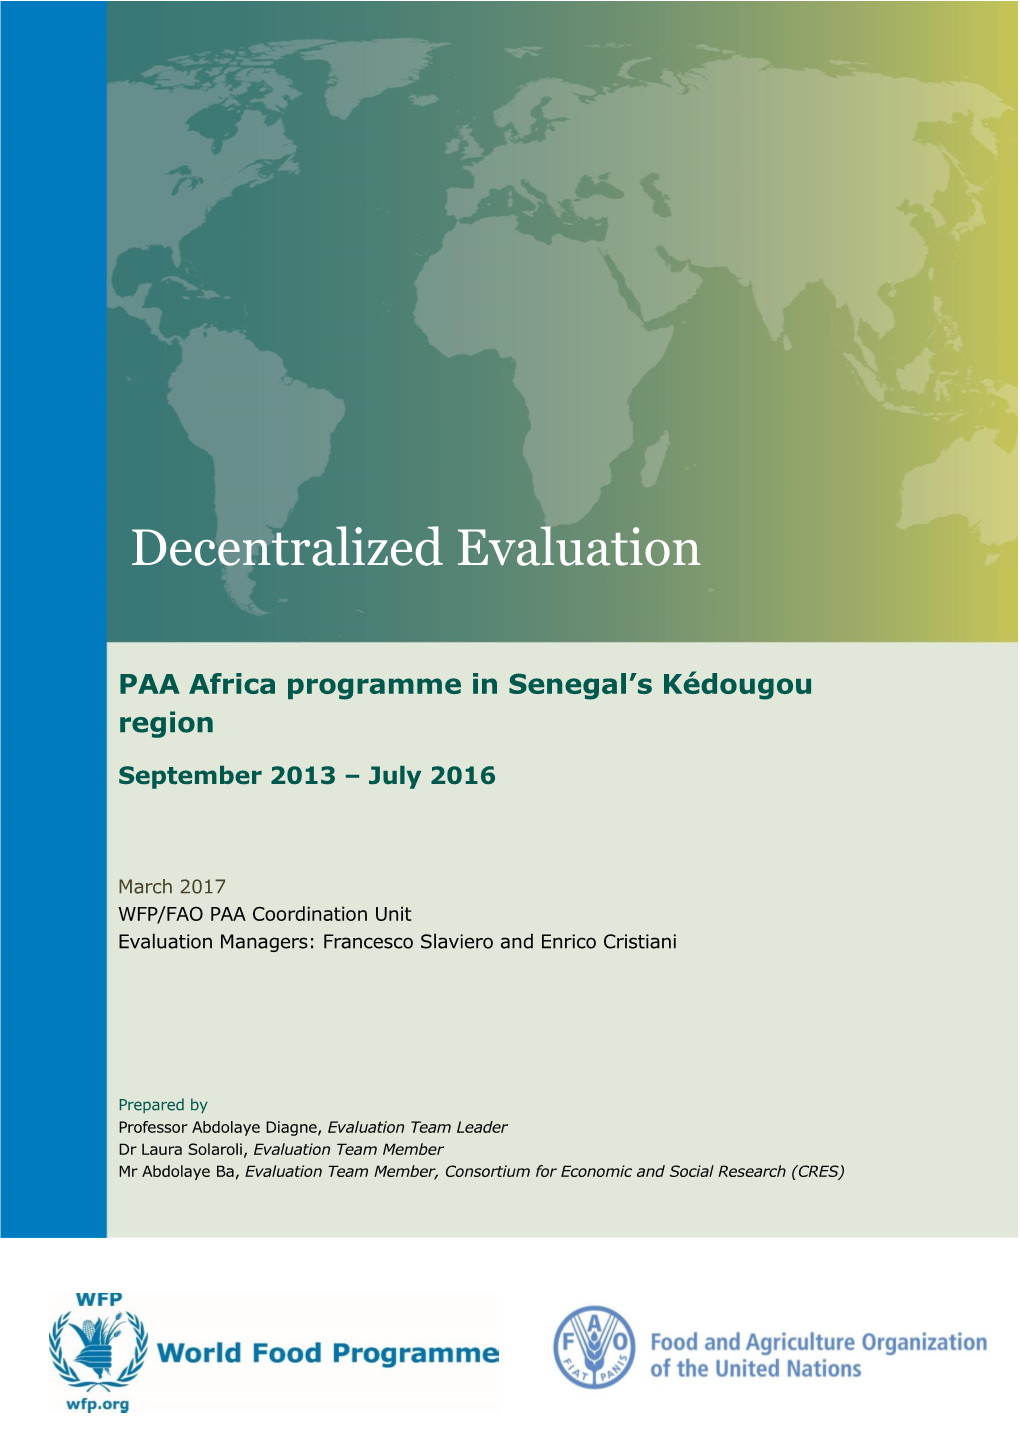 PAA Africa Programme in Senegal's Kédougou Region